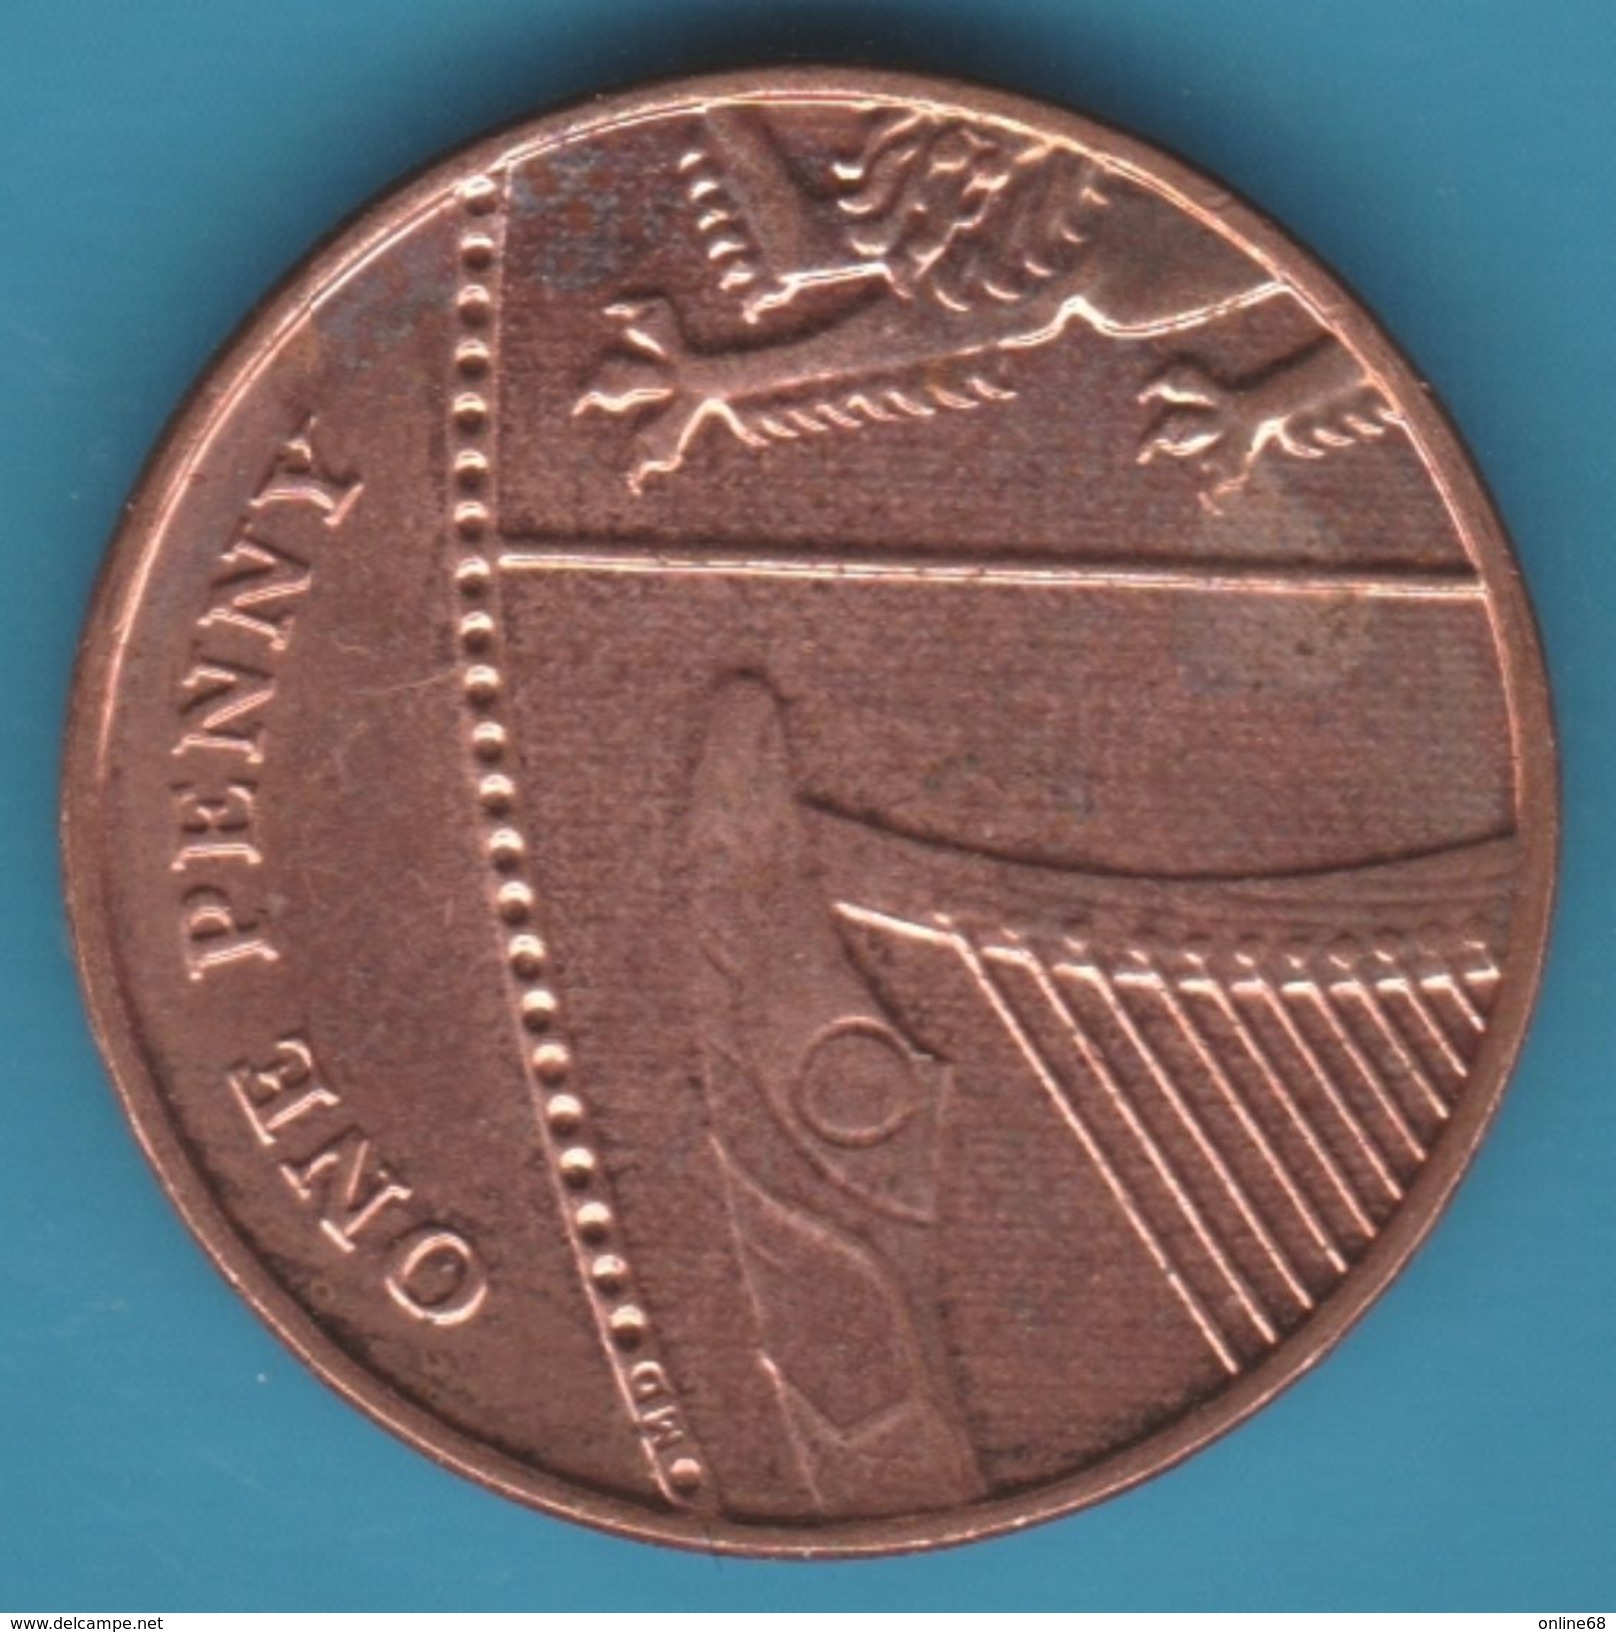 GB 1 PENNY 2013 KM# 1107 Elizabeth II - 1 Penny & 1 New Penny